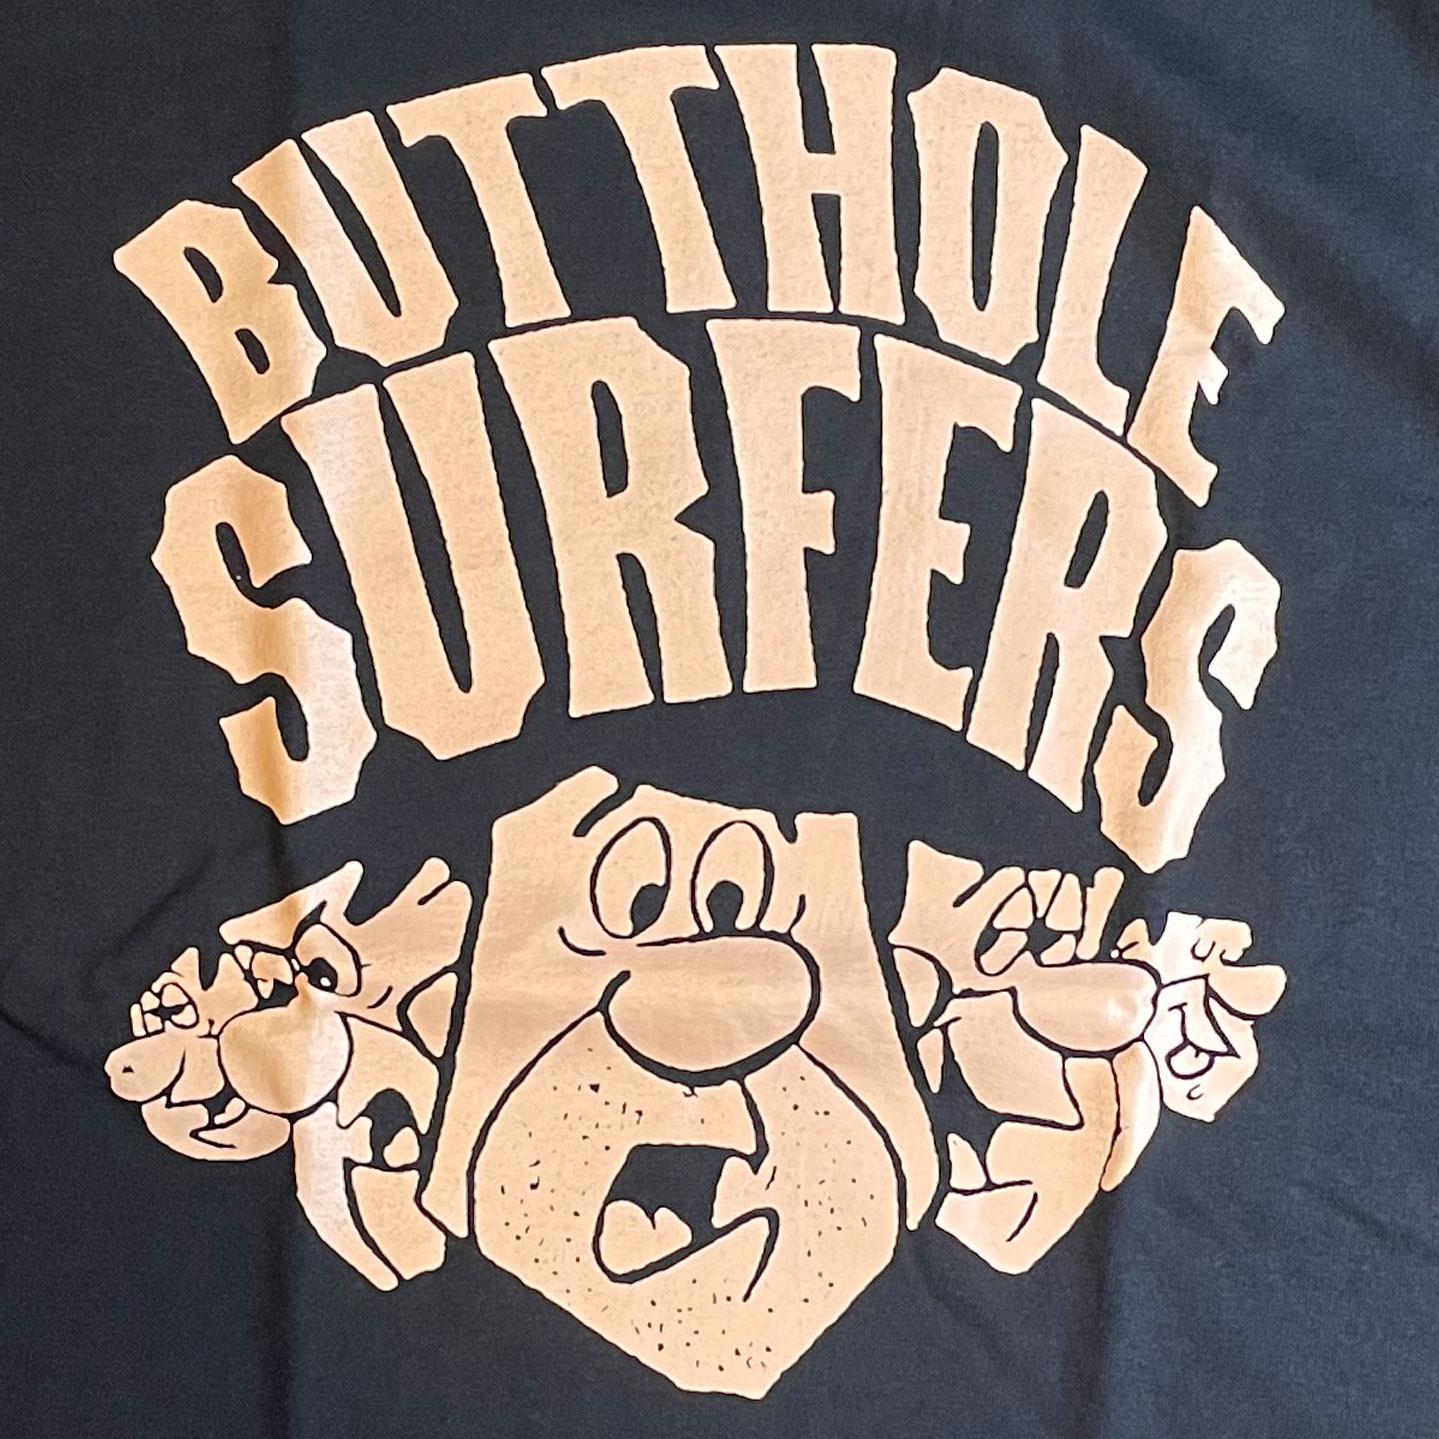 BUTTHOLE SURFERS ロンT DAD SHIT | 45REVOLUTION